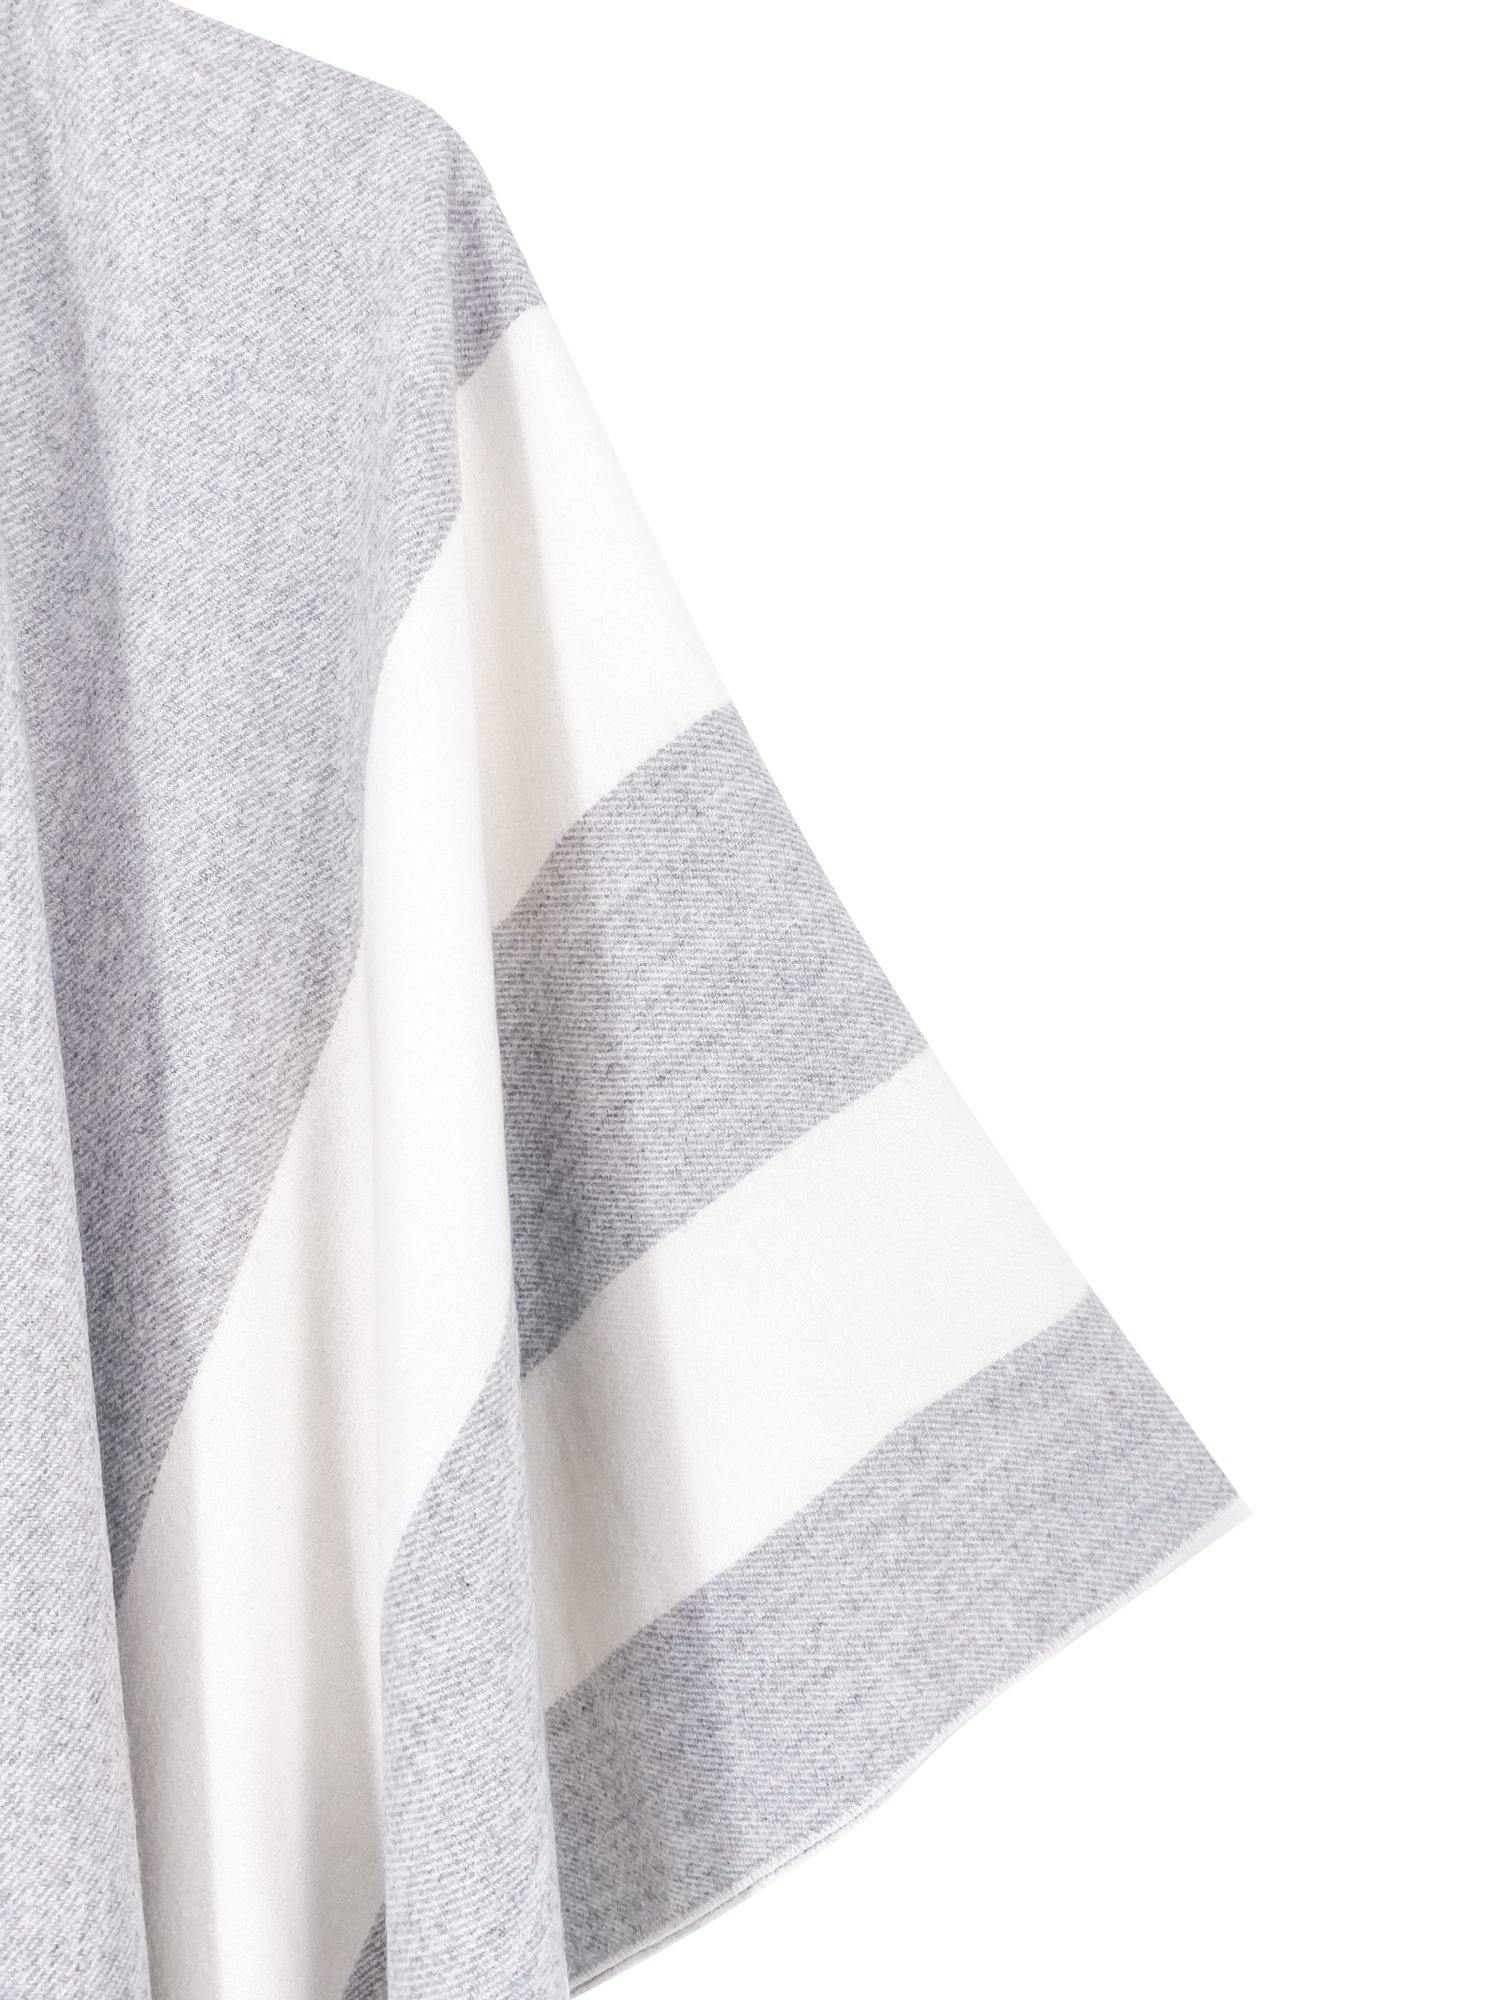 Cloudy Gray Striped Poncho - Shopmossrose